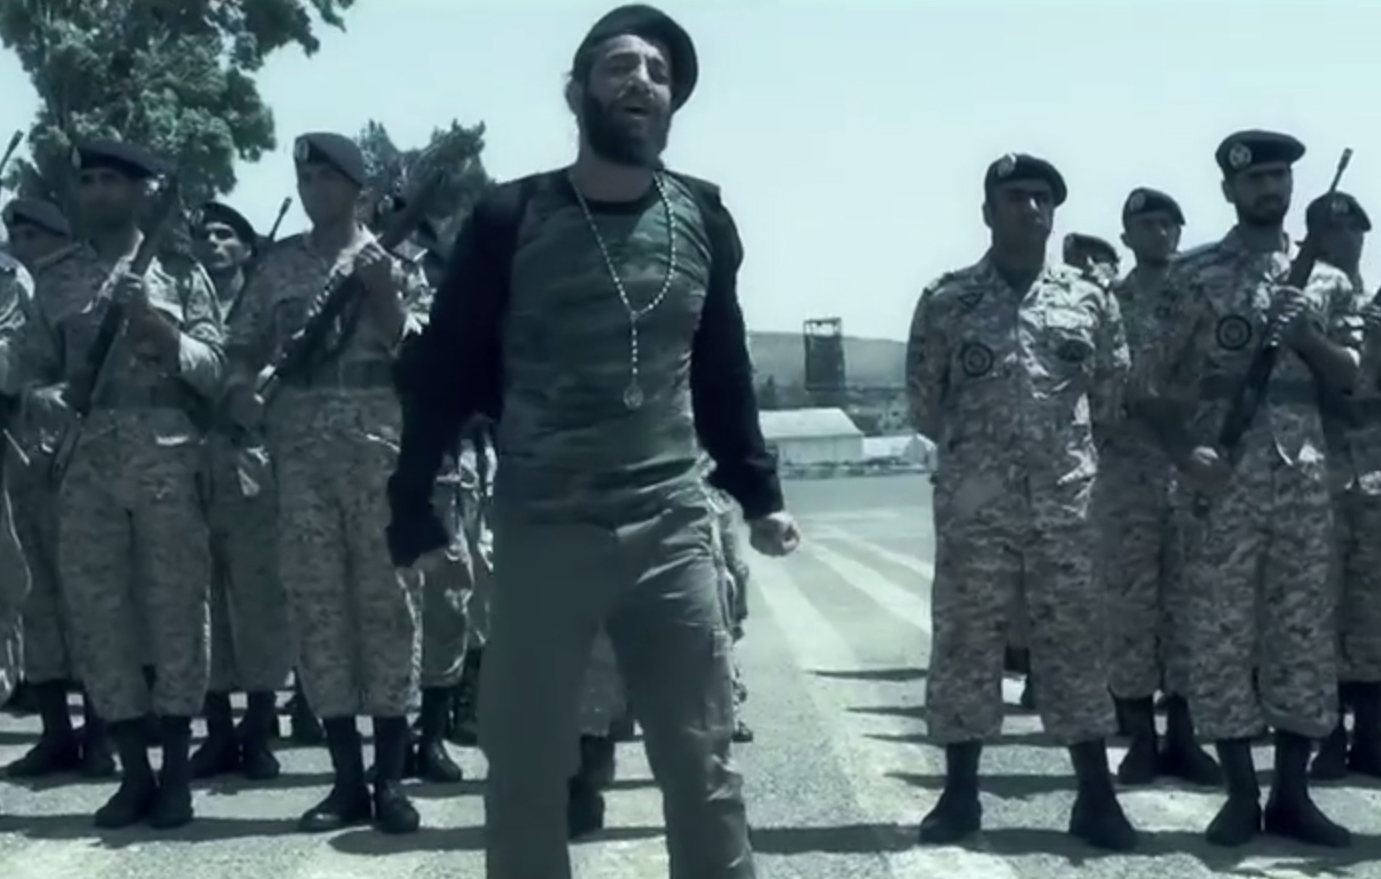 Screengrab from Amir Tataloo's music video.